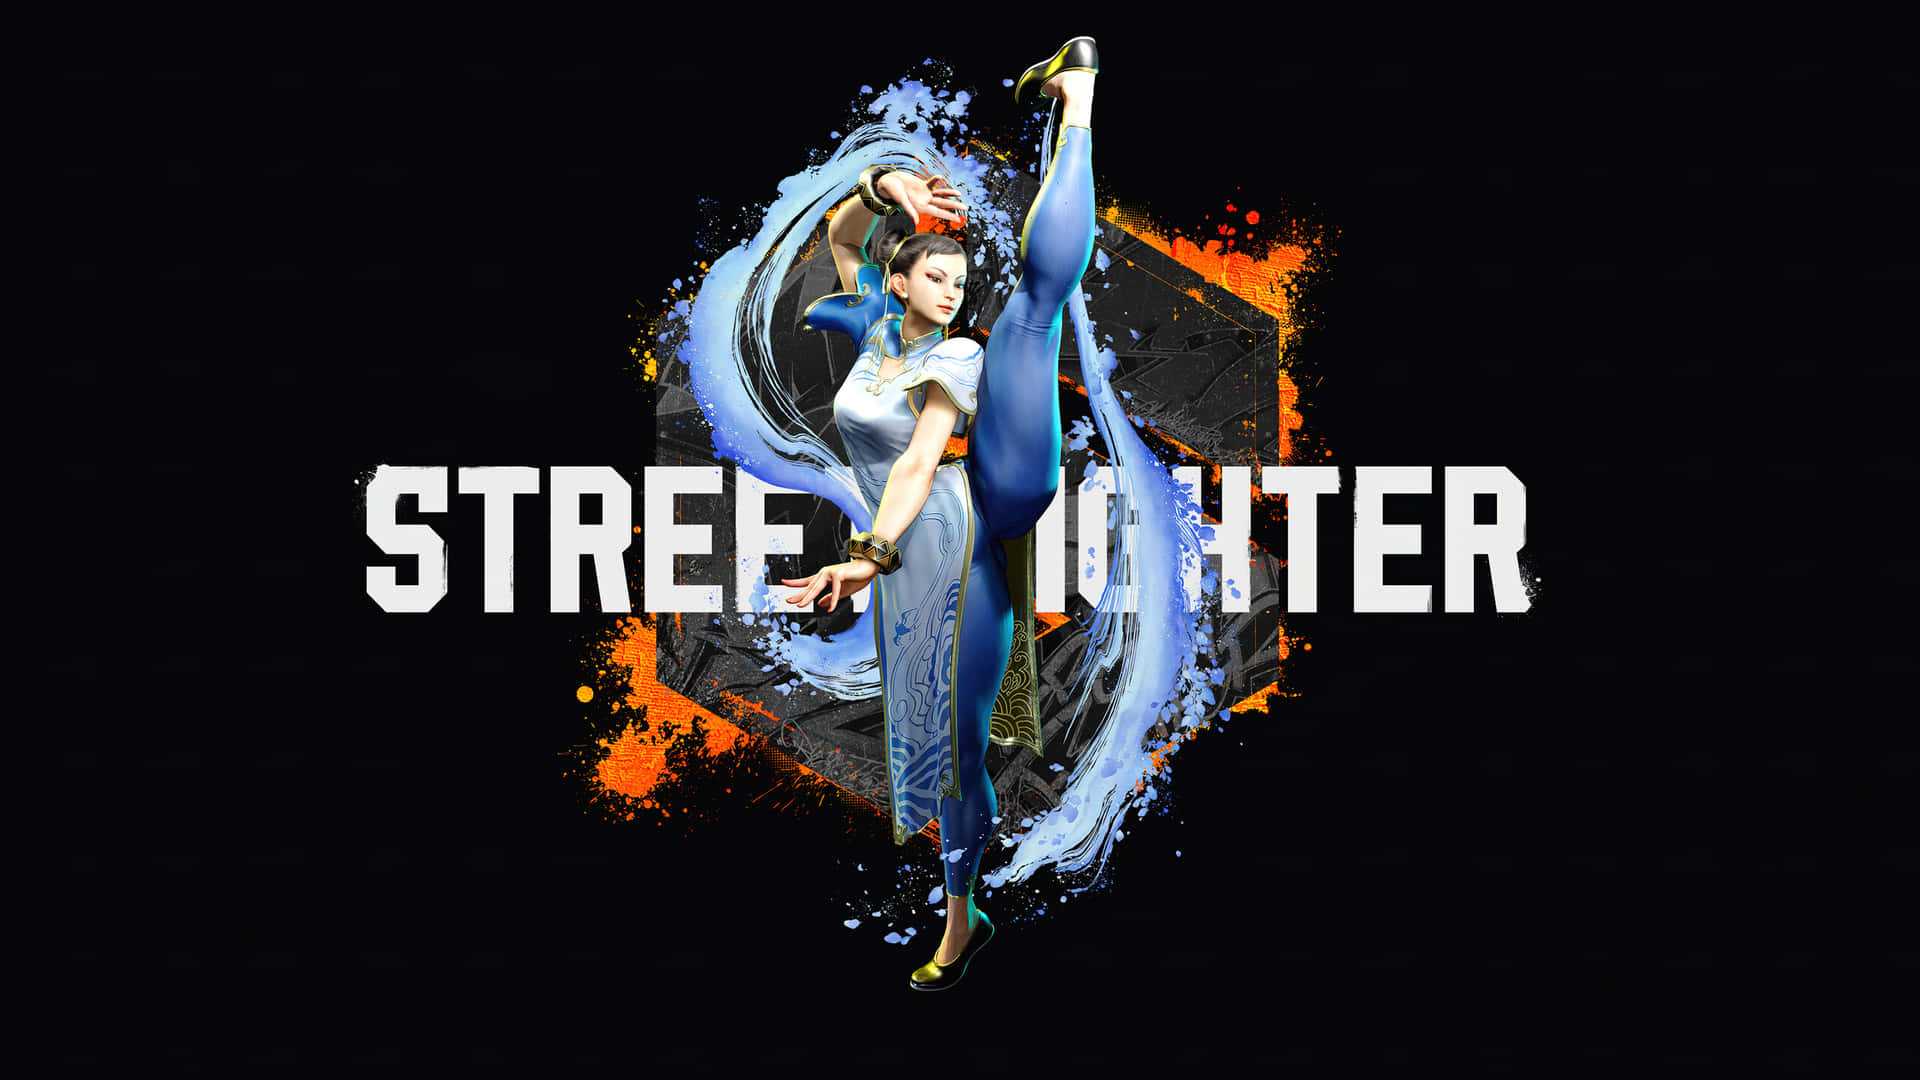 Chun Li Street Fighter Dynamic Pose